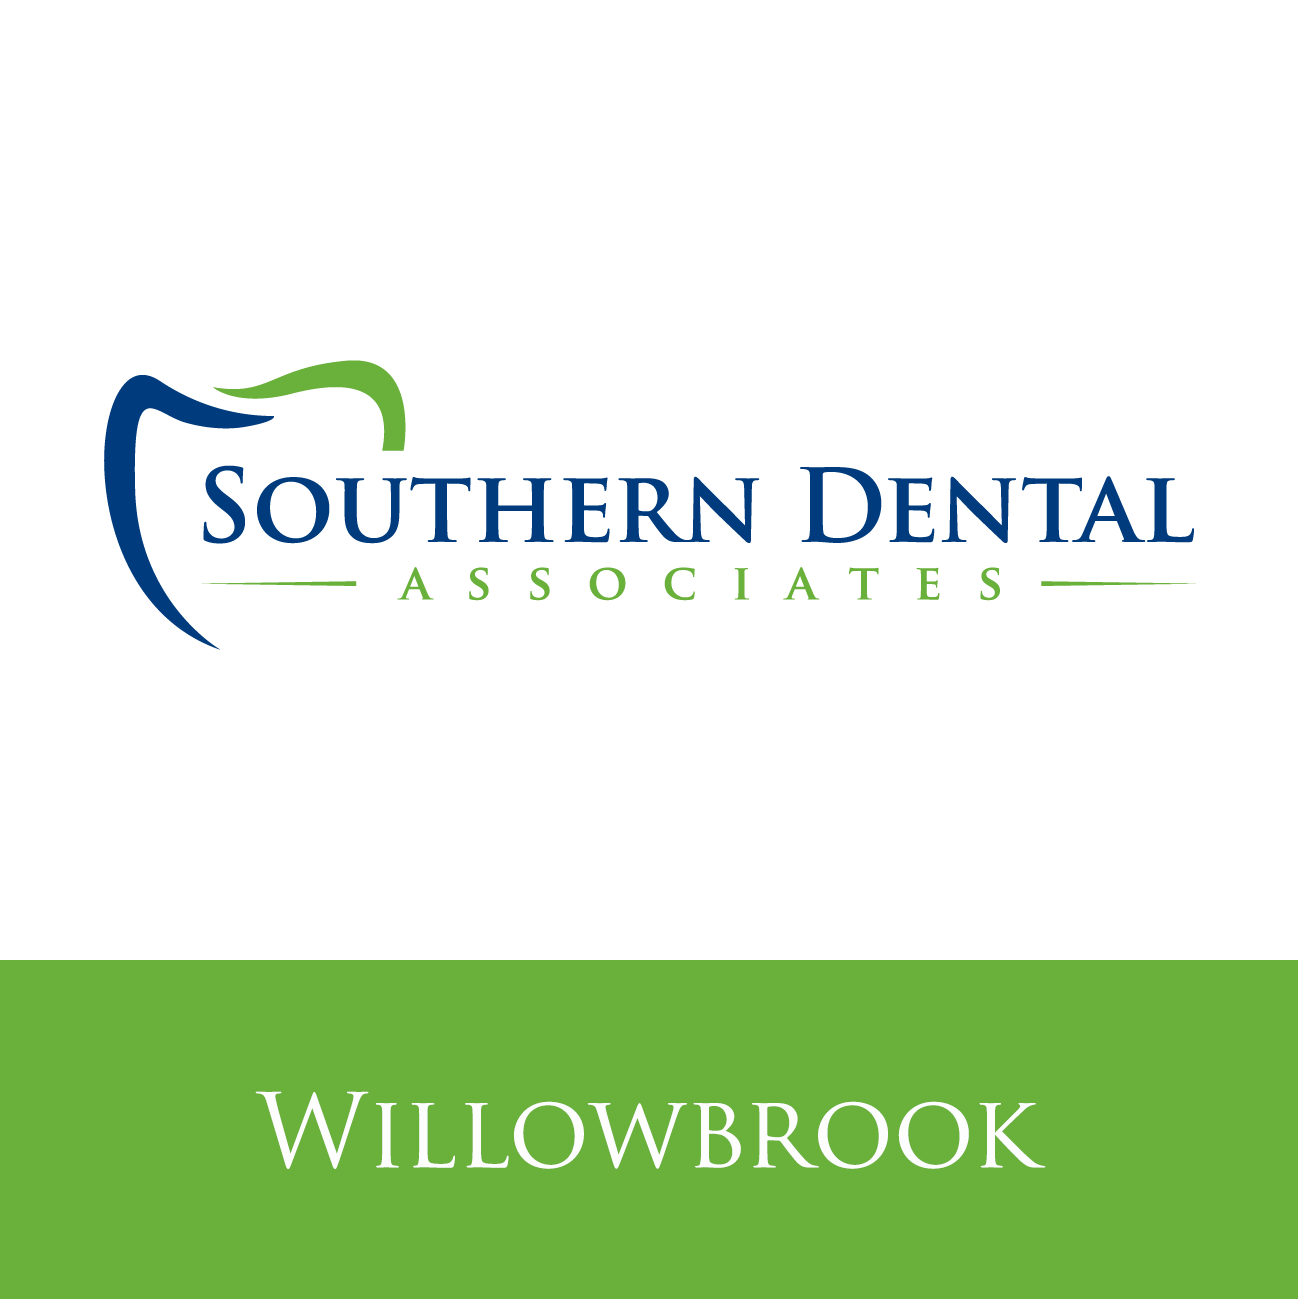 Southern Dental at Willowbrook